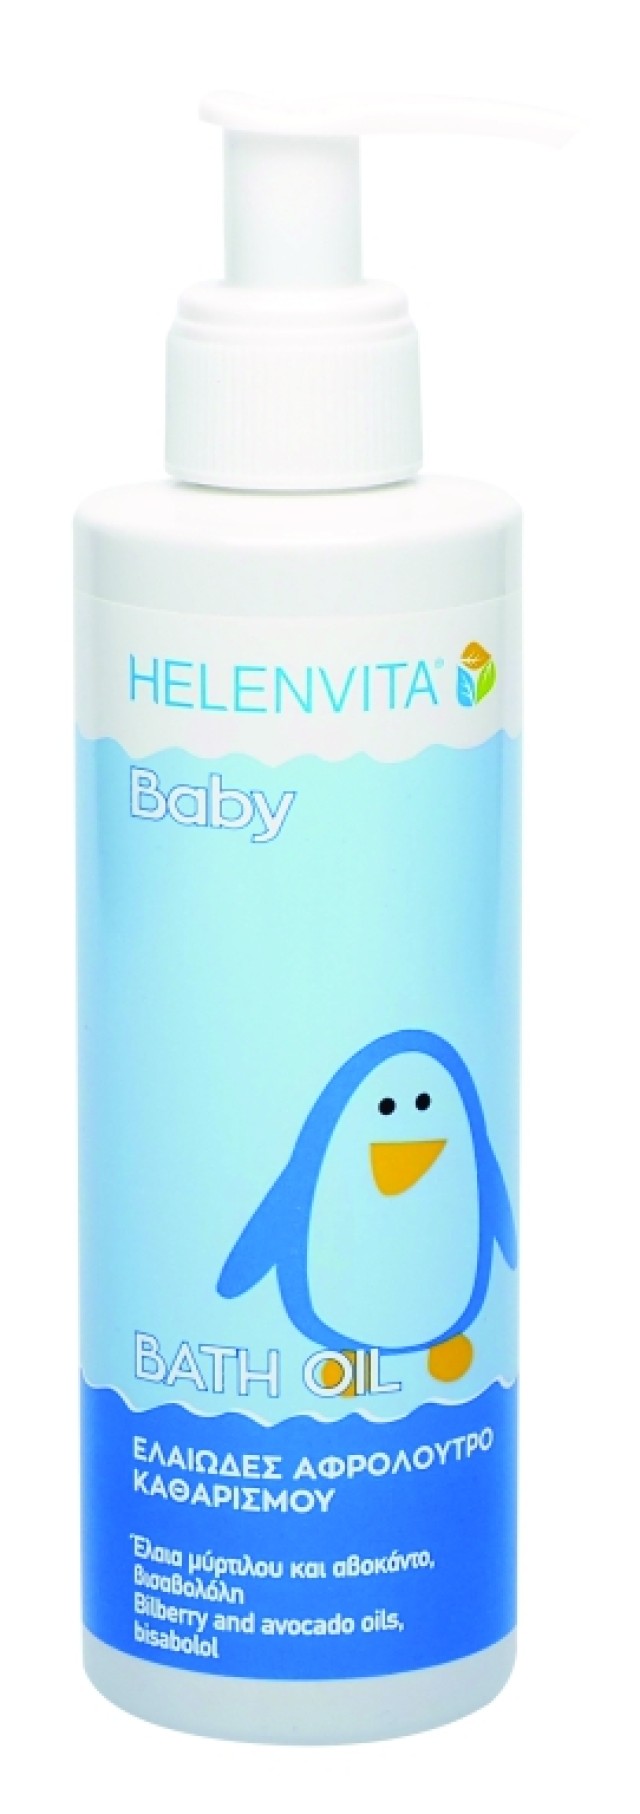 Helenvita Baby Bath Oil 200 ml product photo